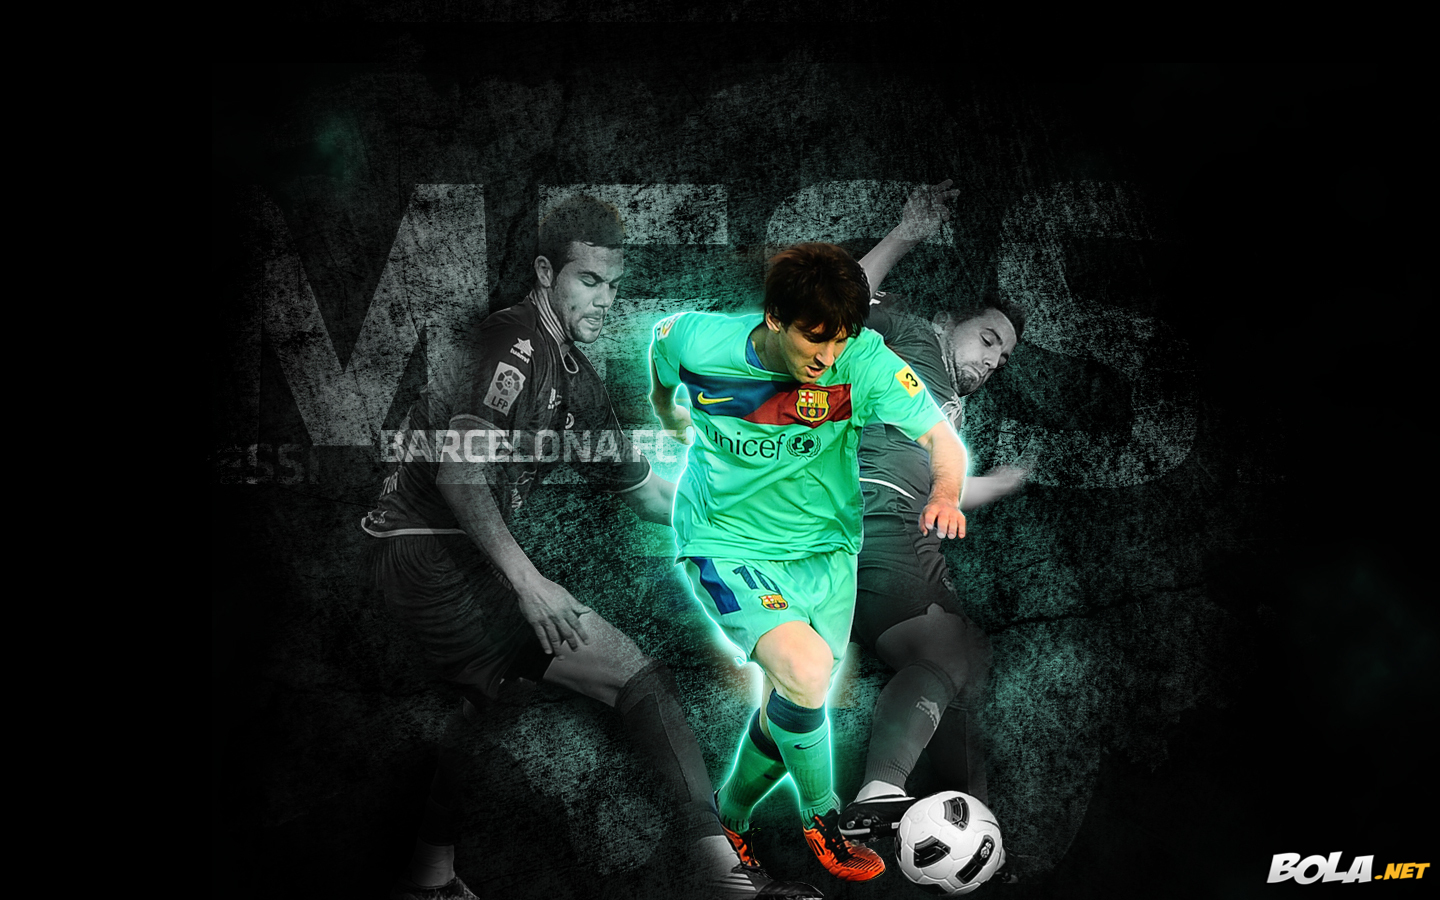 Deskripsi : Wallpaper Lionel Messi, size: 1440x900